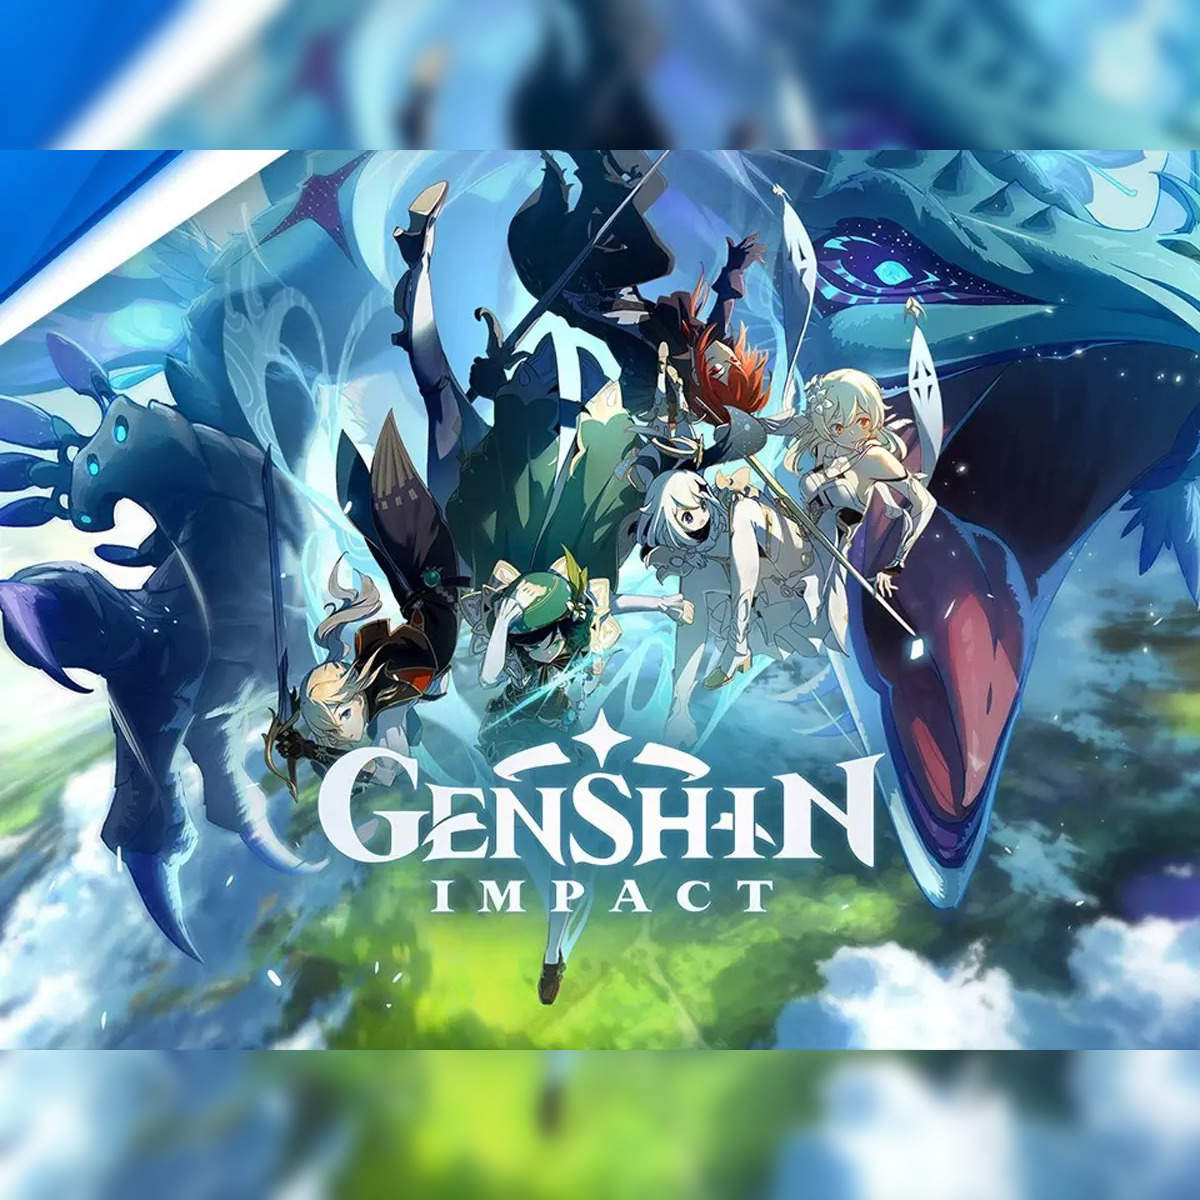 Is Genshin Impact cross platform? Progress sharing features explained